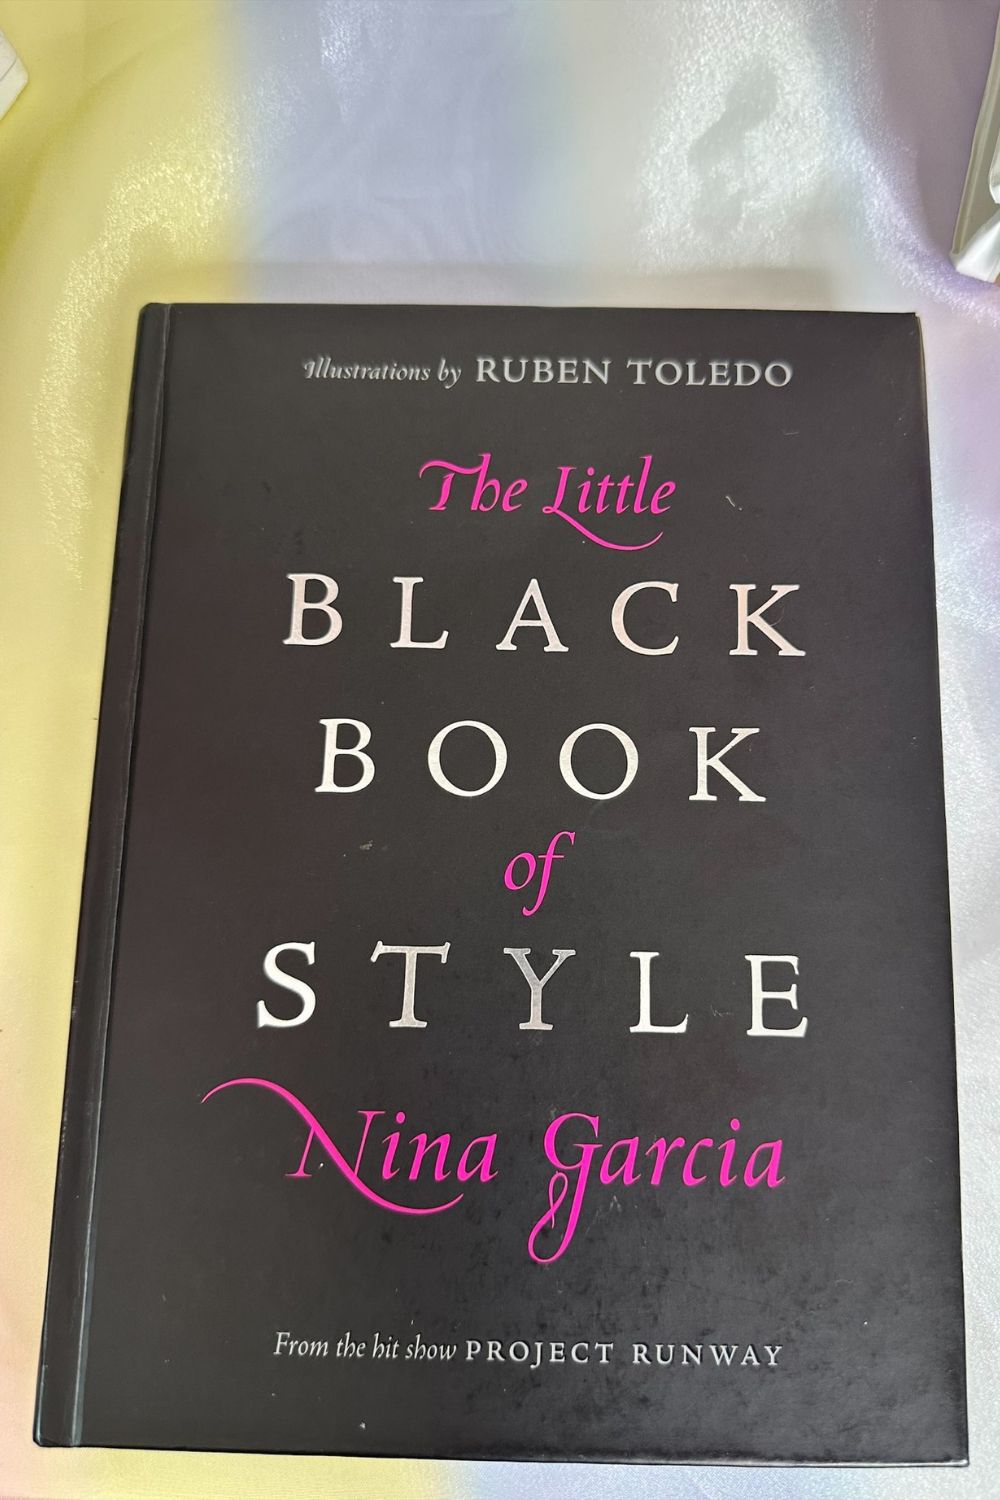 THE LITTLE BLACK BOOK OF STYLE NINA GARCIA*